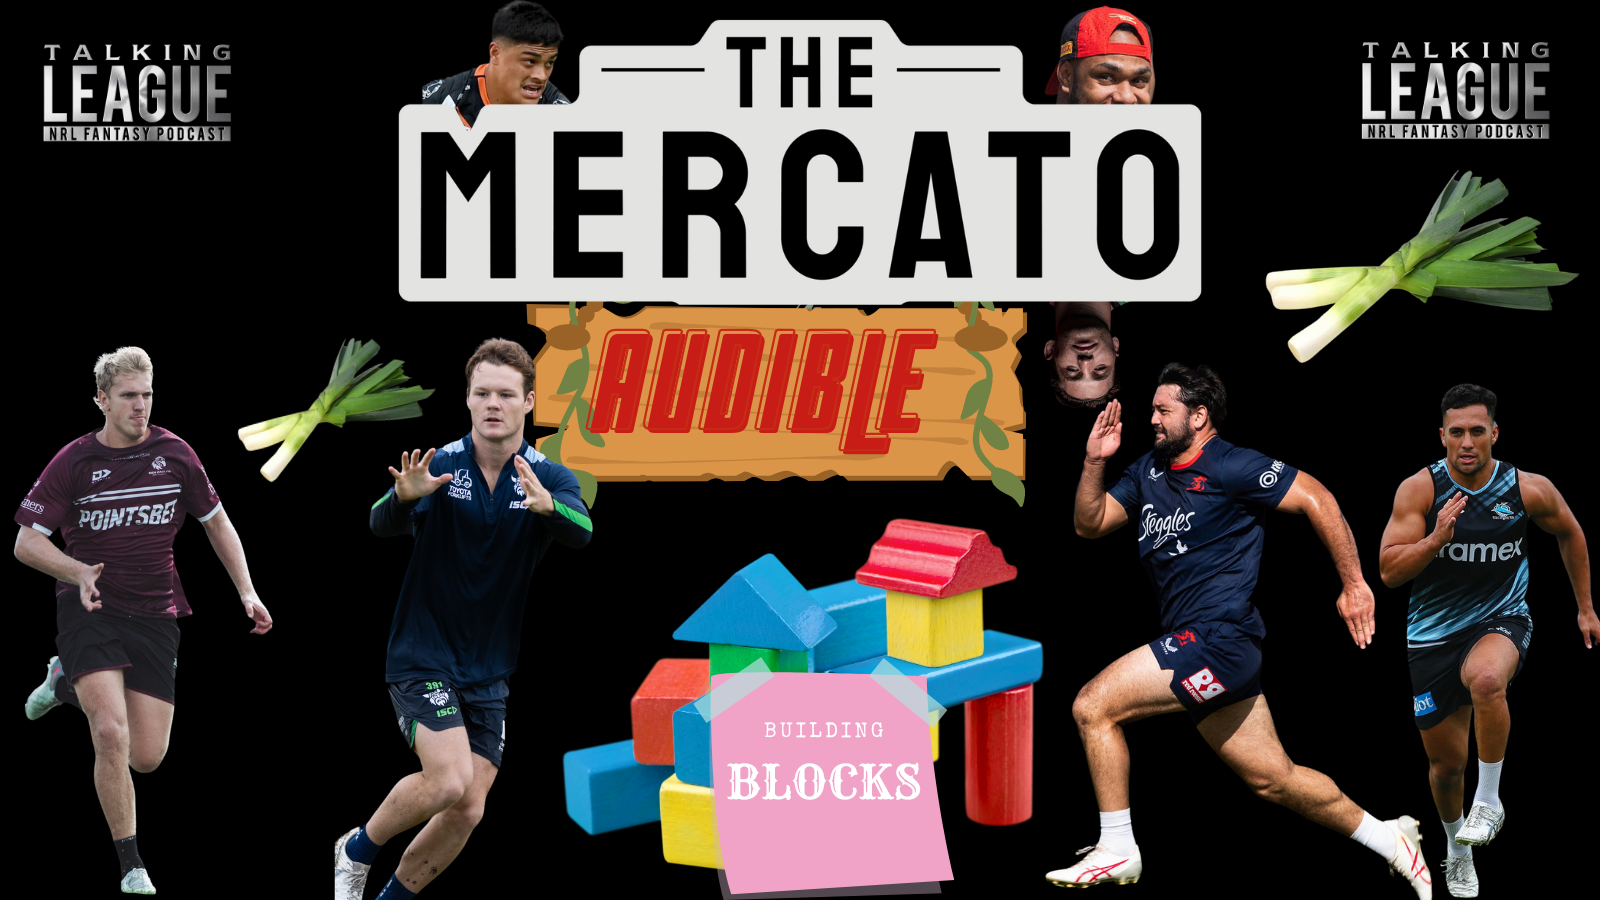 The Mercato - Building Blocks (Talking League)